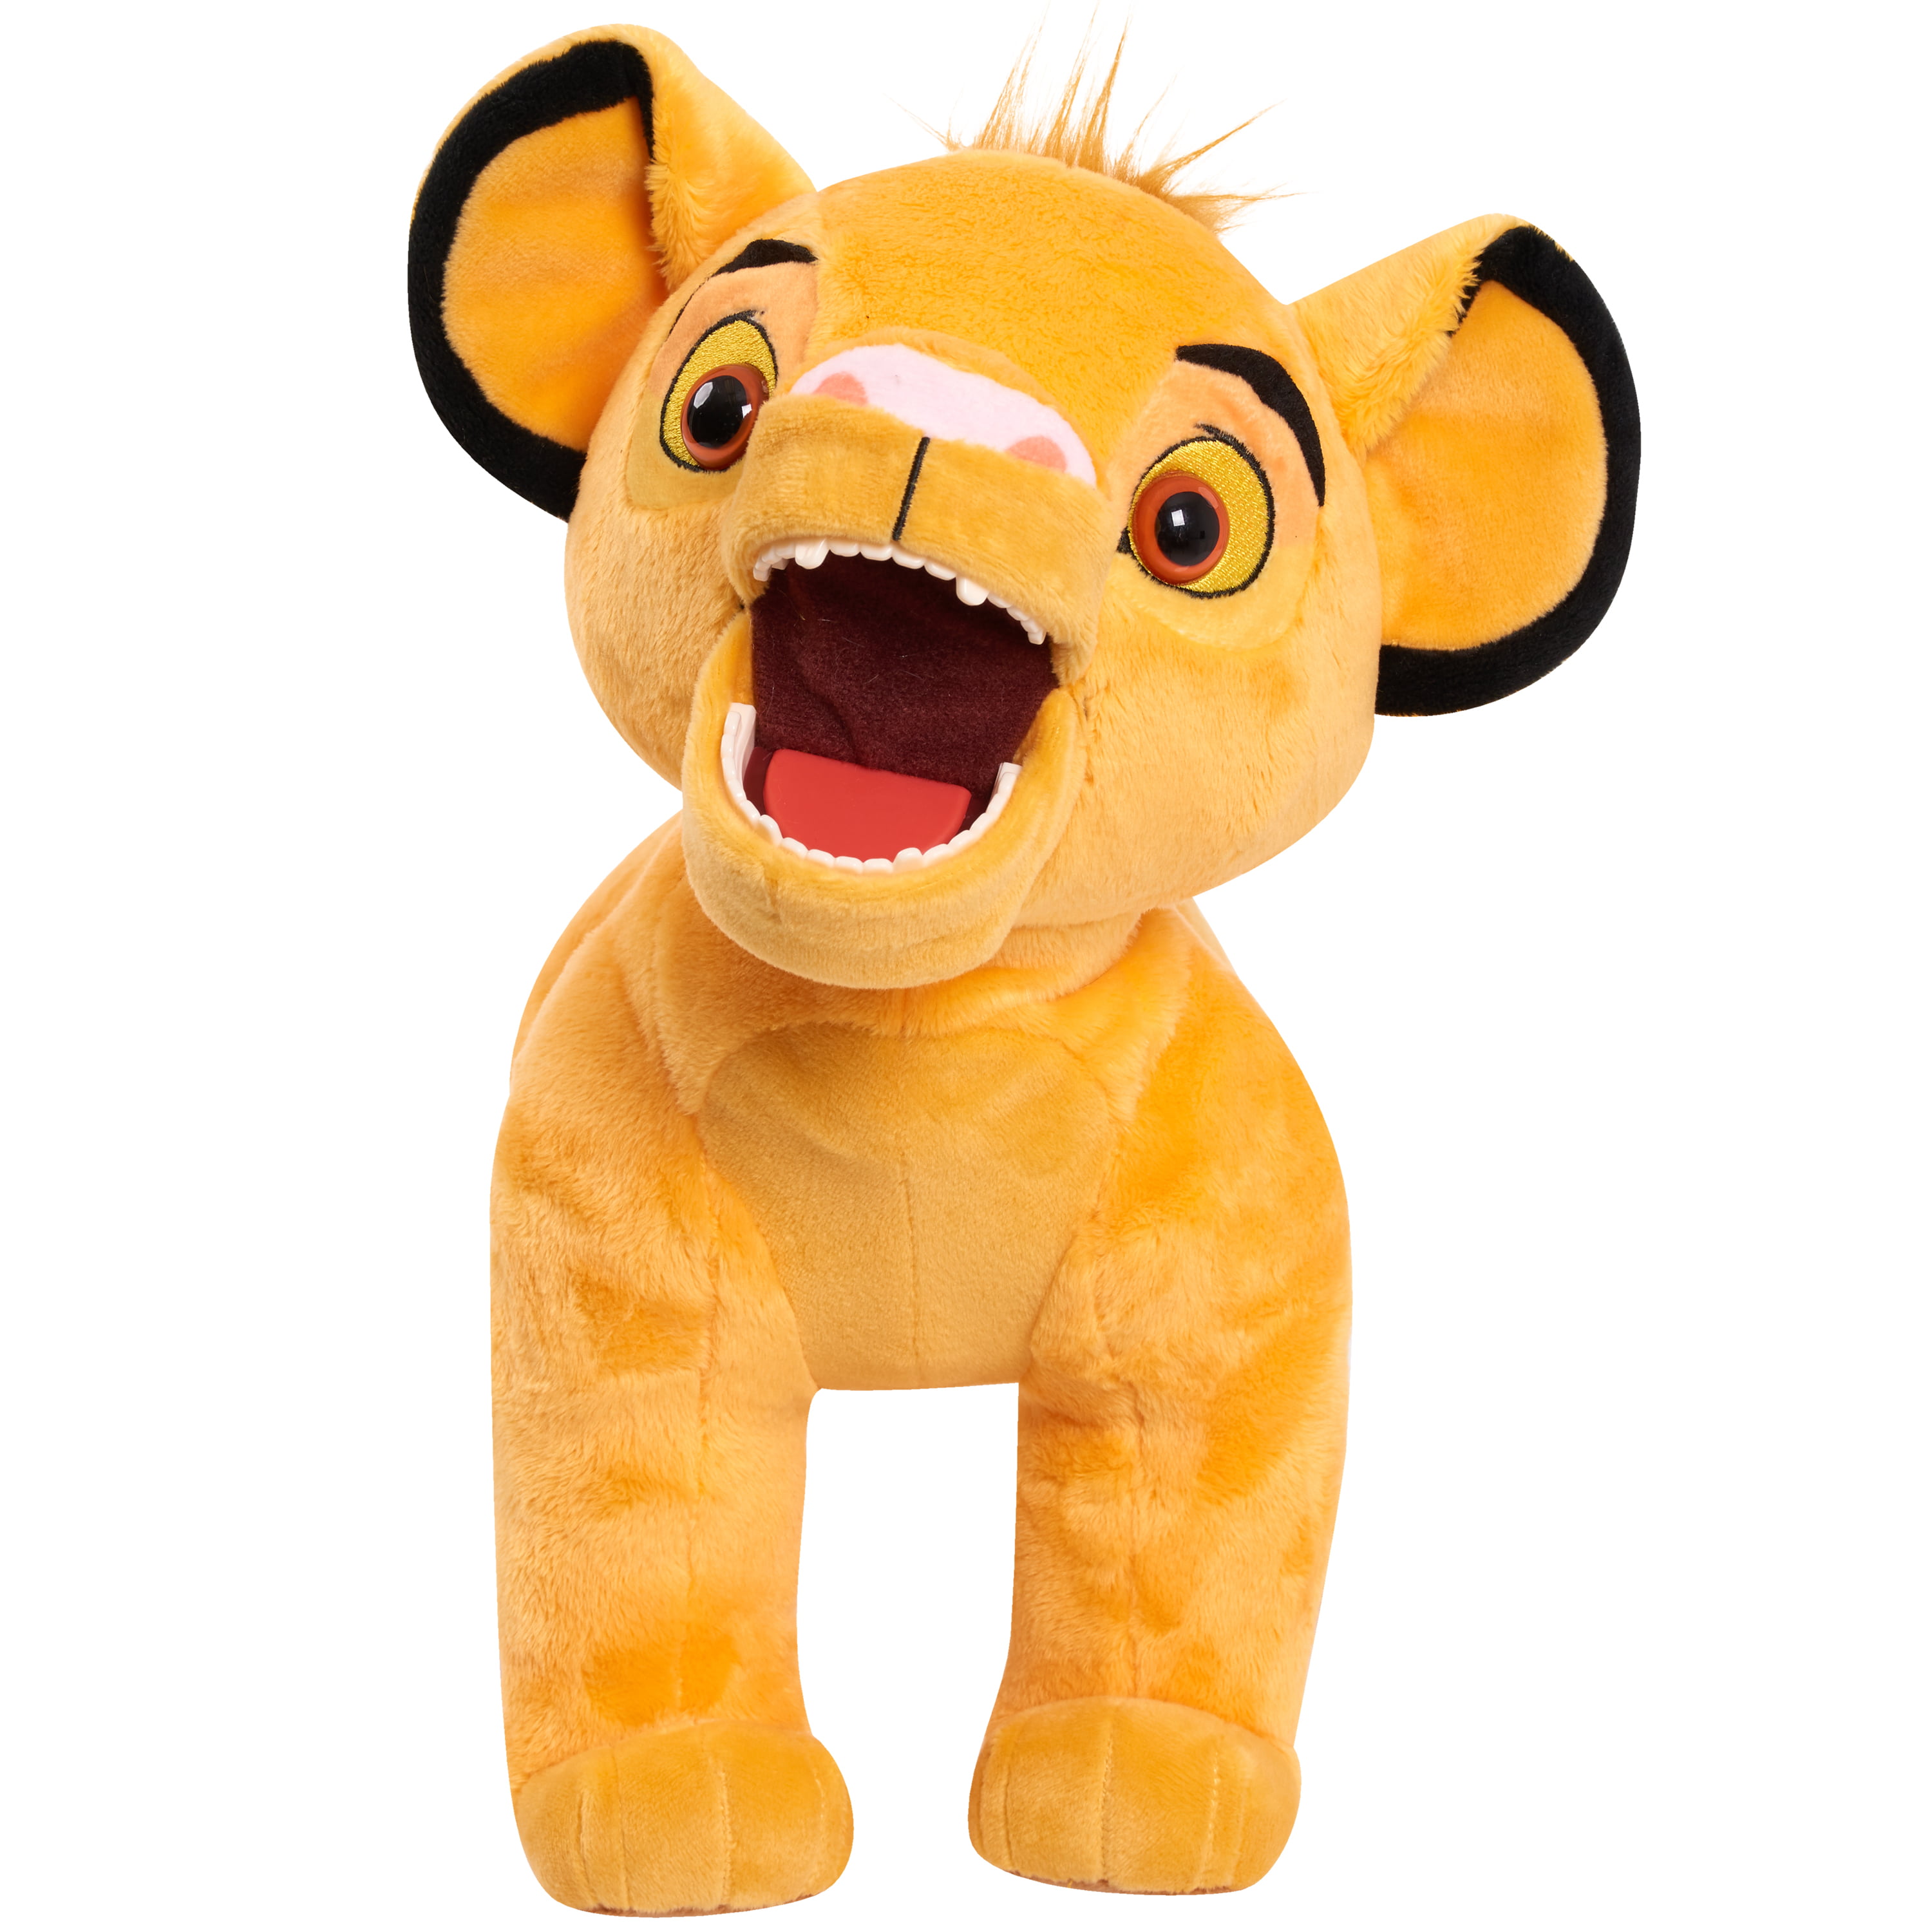 27 29cm The Lion King Plush Toys simba lion king stuffed animal